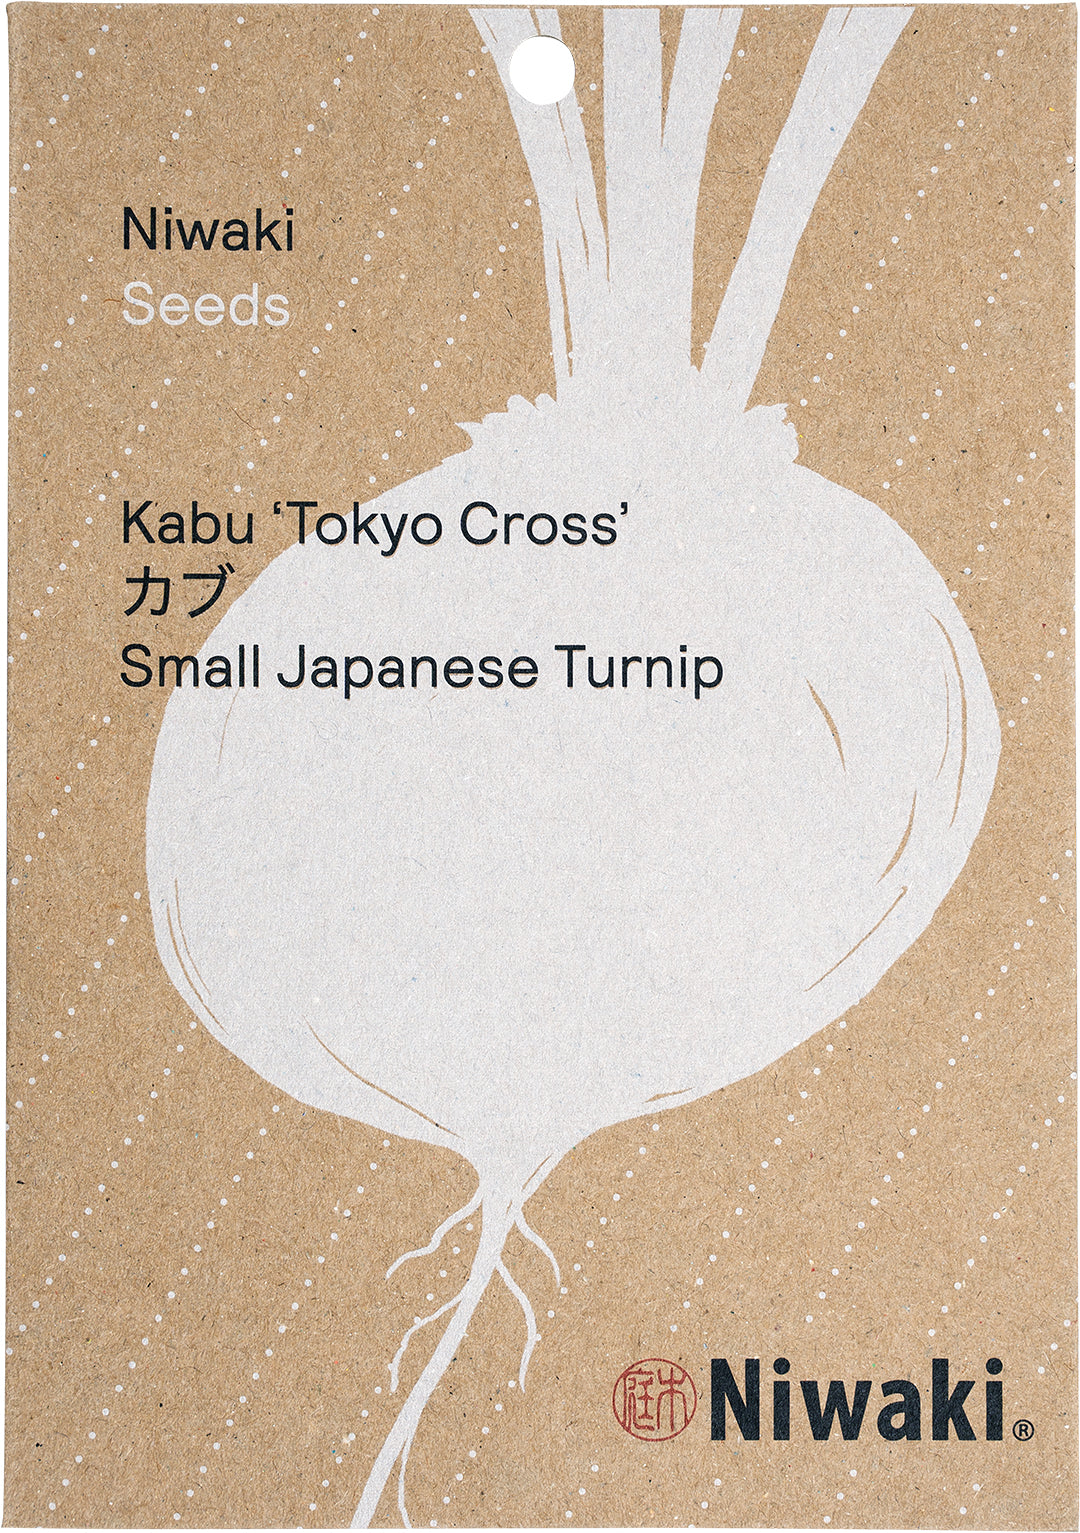 Niwaki Kabu ‘tokyo Cross’ Seeds Small Japanese Turnip